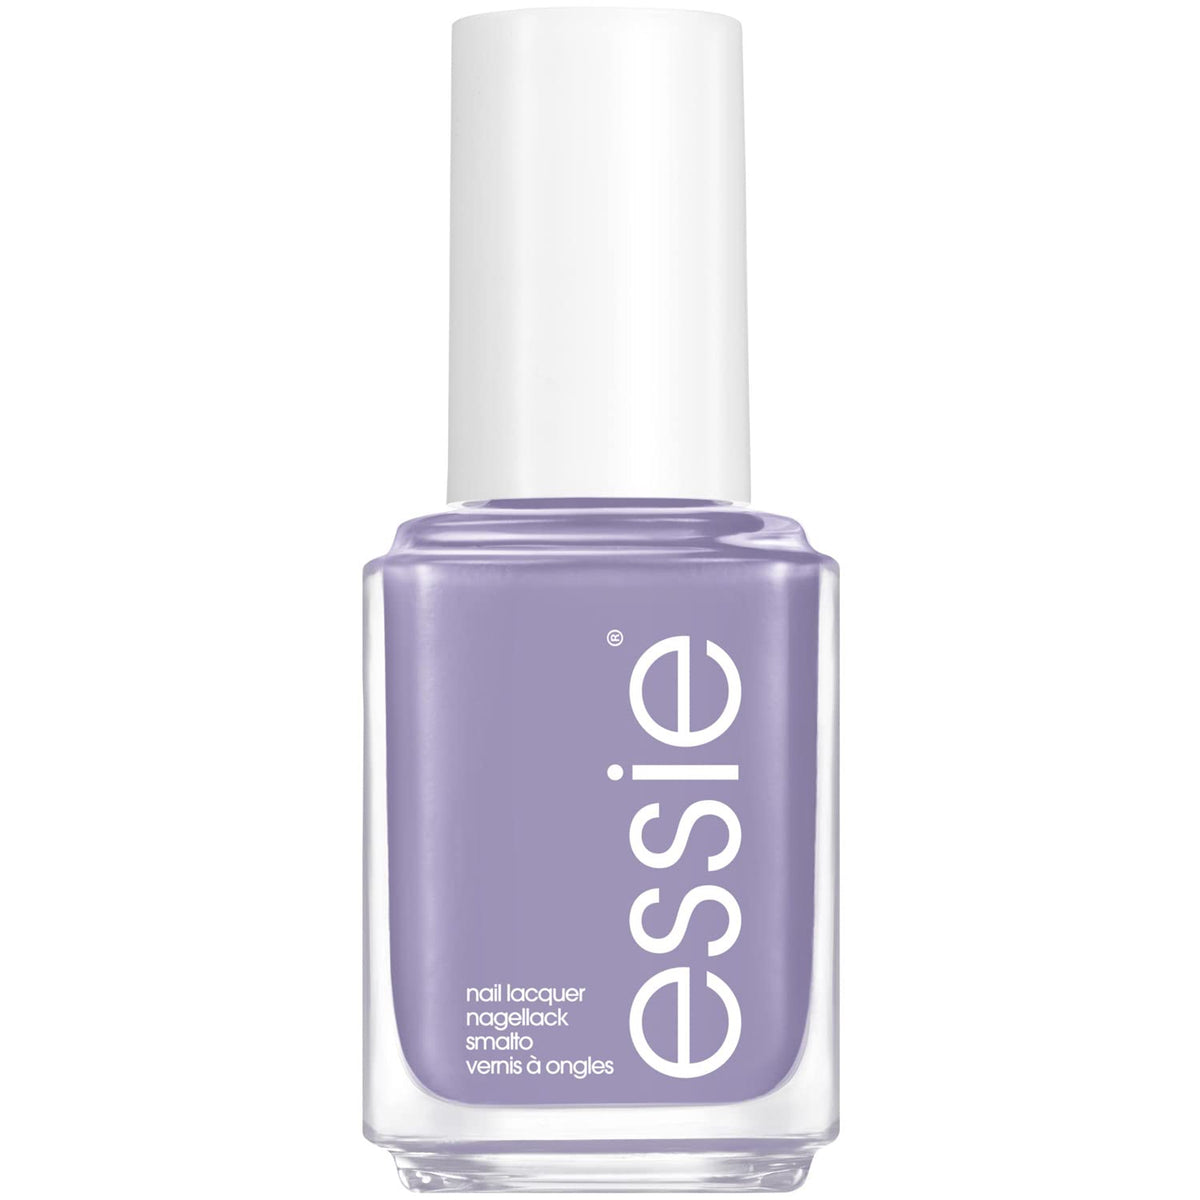 essie Original Nail Cool 855 - Lavender Grayish Craftiness, Polish: Pursuit 13.5ml Nail Polish Indulgence In of Beauty-Store